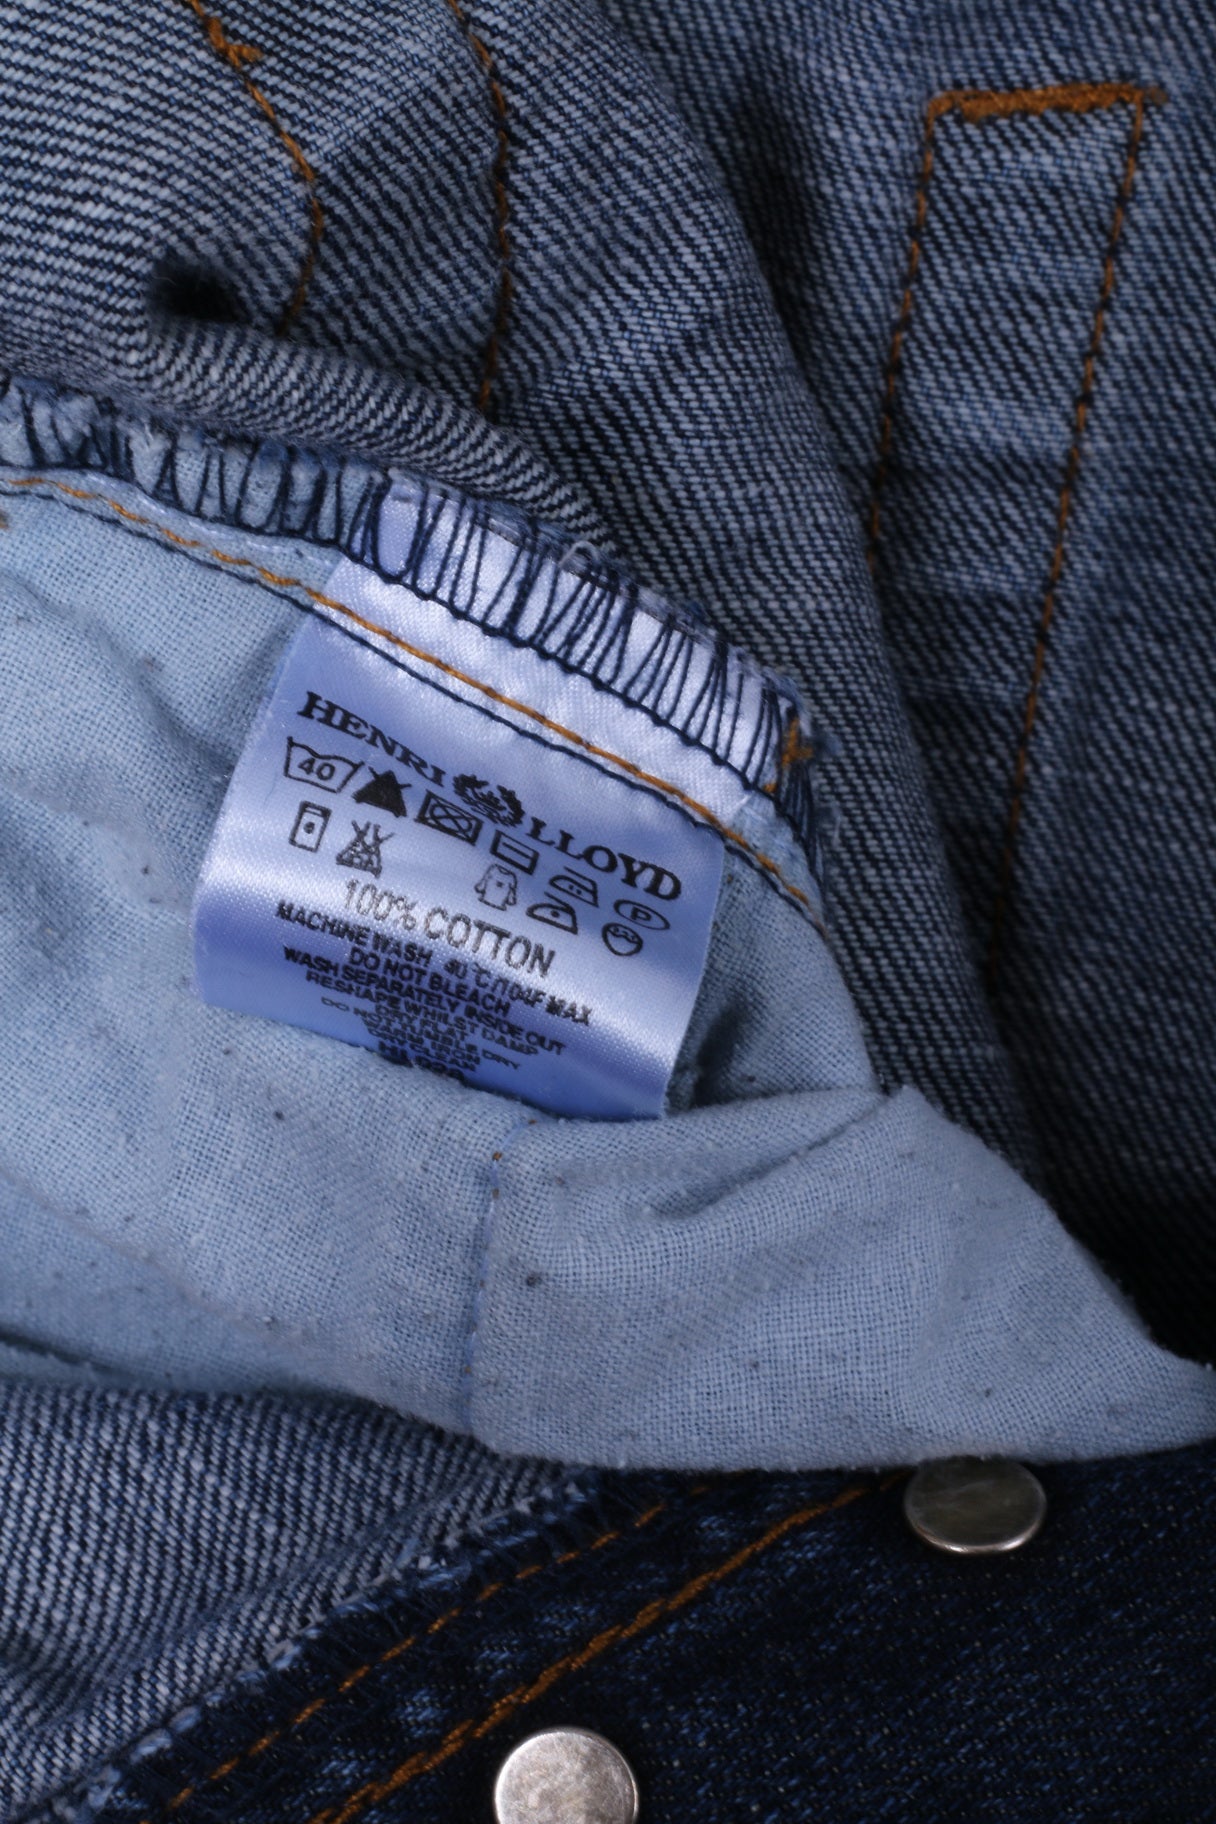 Henri Lloyd Mens 30 S Trousers Blue Jeans Cotton Denim Straight Leg Pants